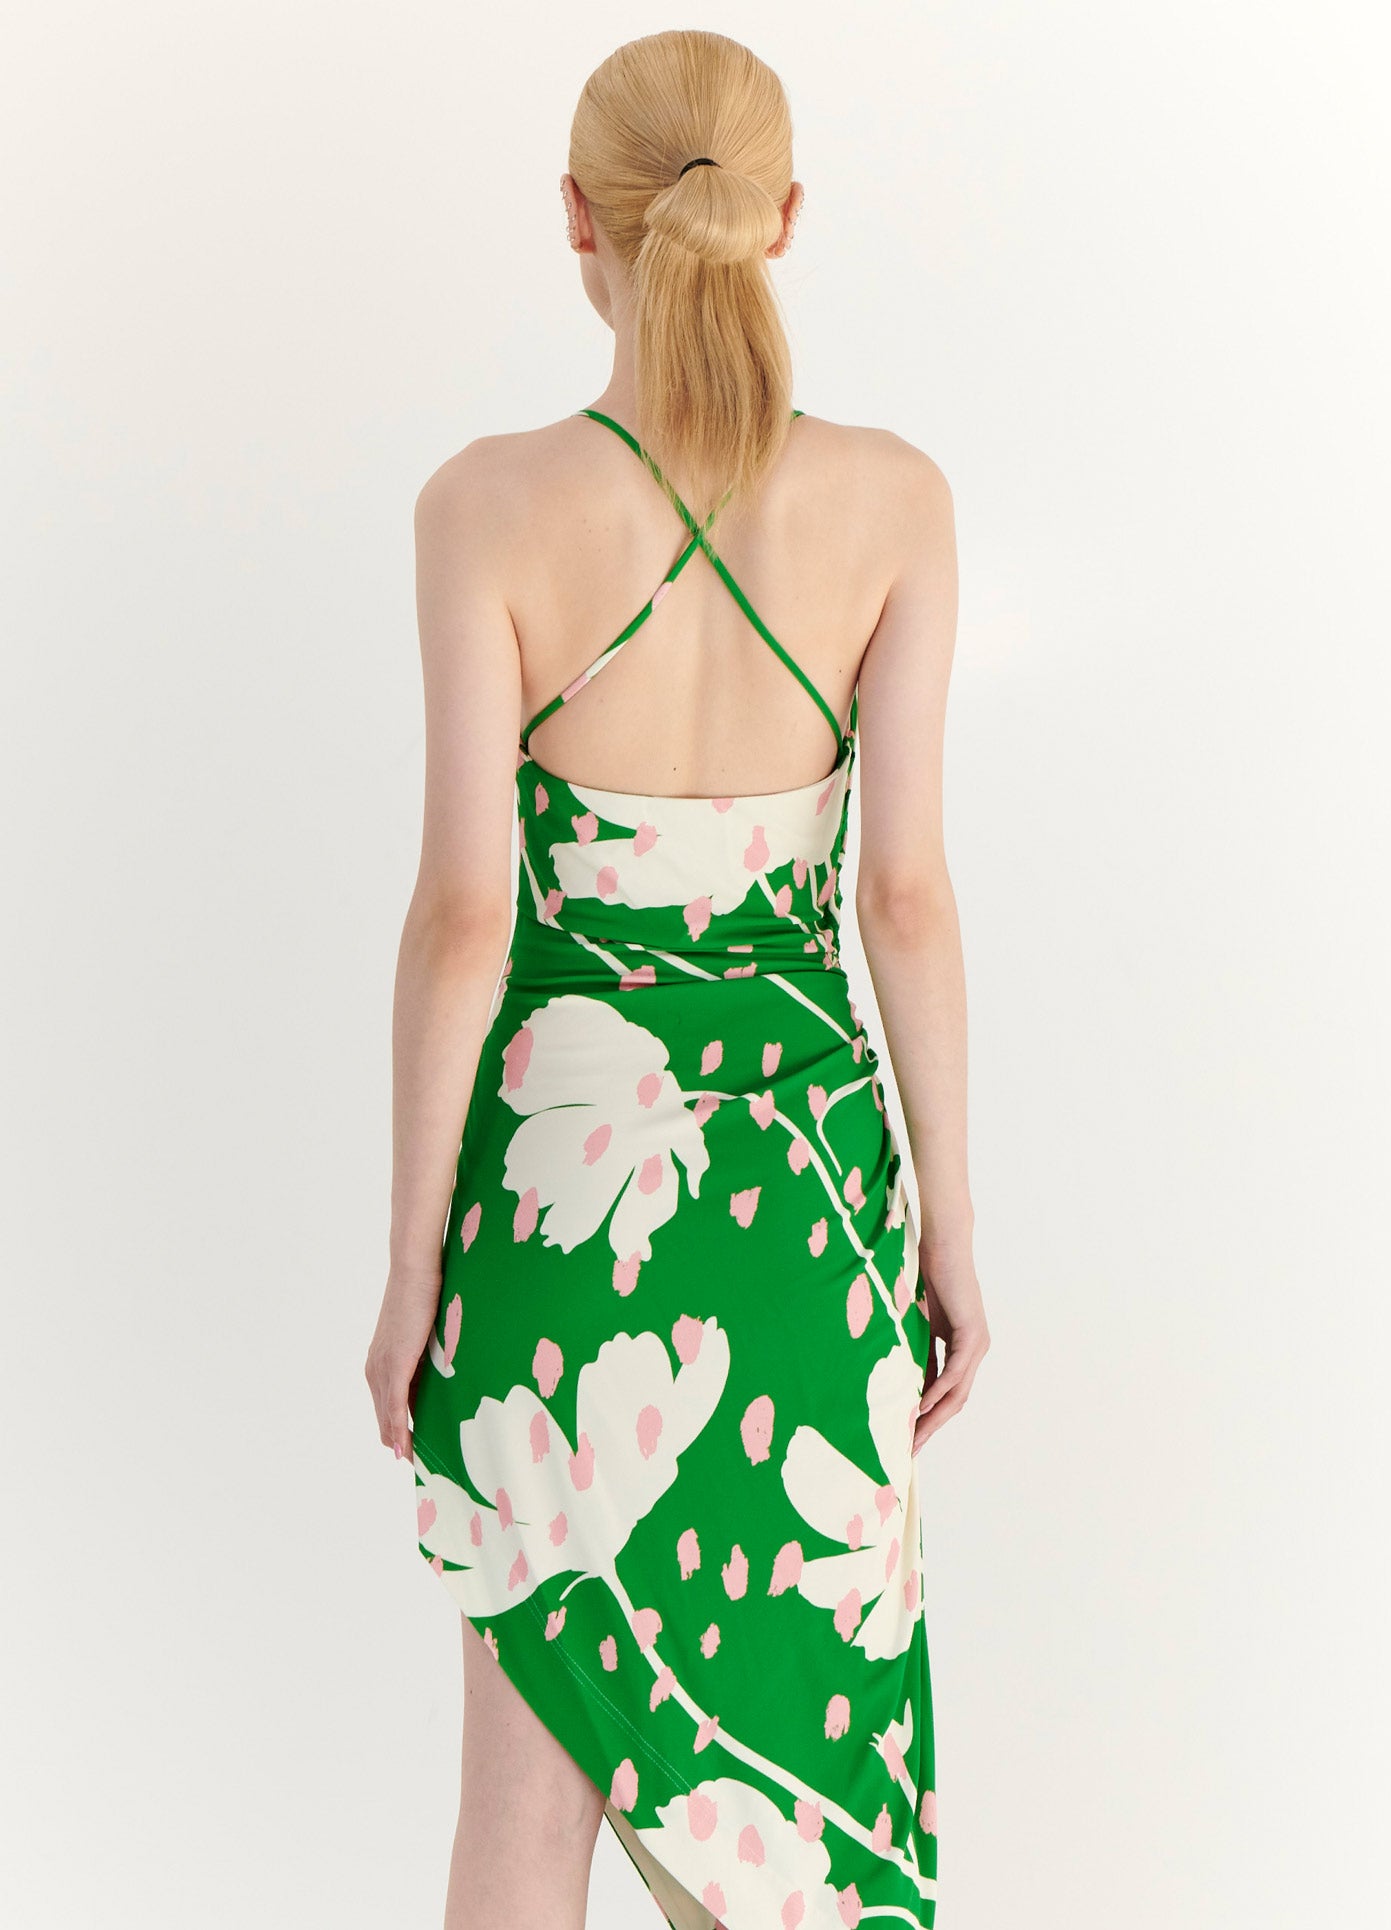 MONSE Floral Print Draped Slip Dress in Green Multi on Model Back View